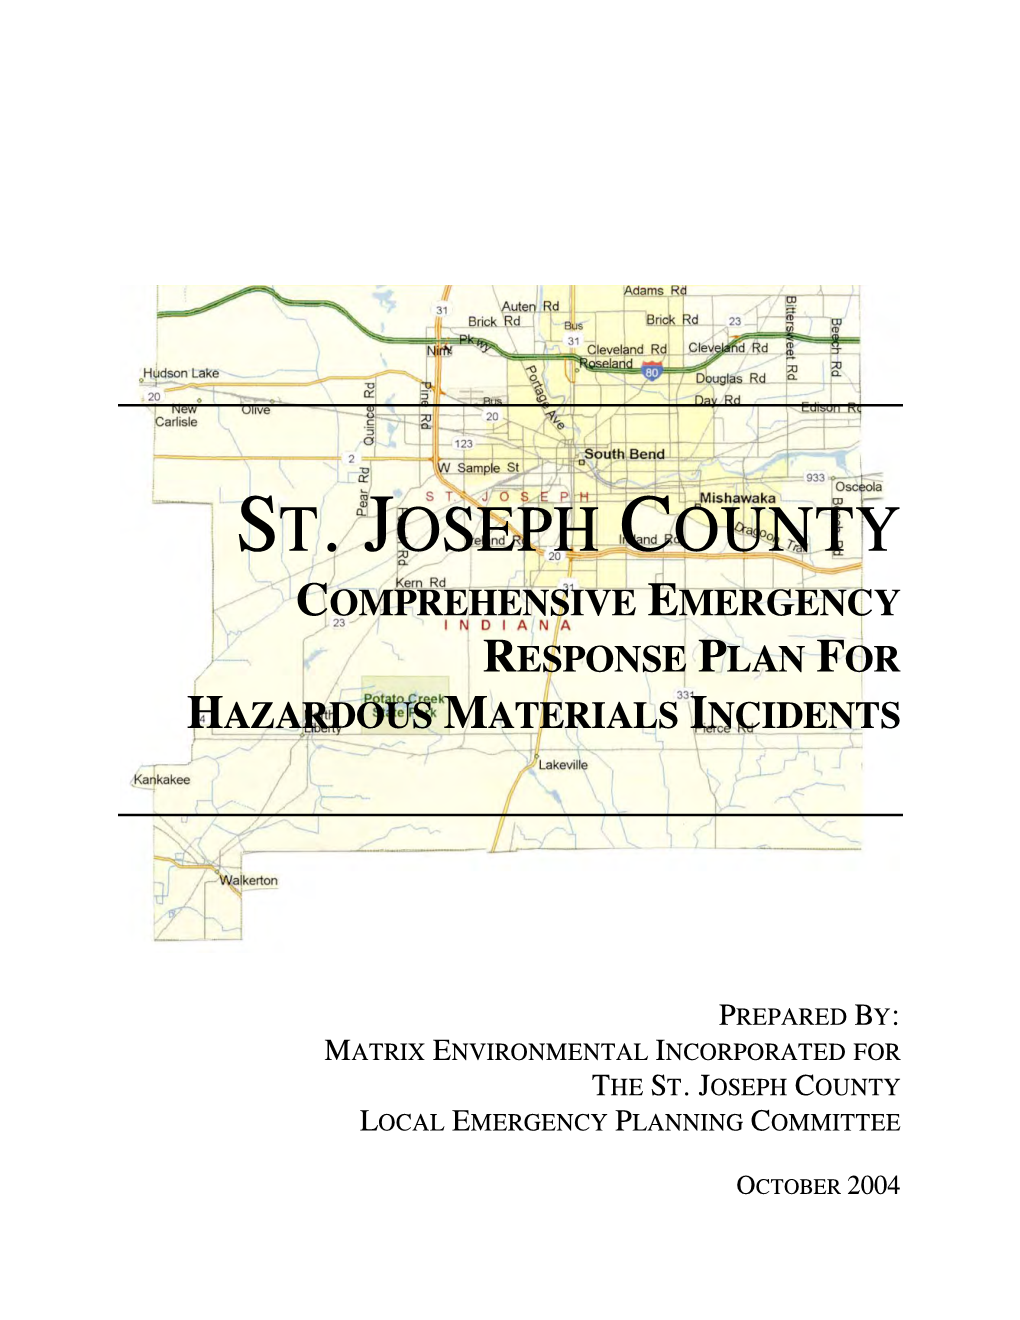 Comprehensive Emergency Response Plan for Hazardous Materials Incidents